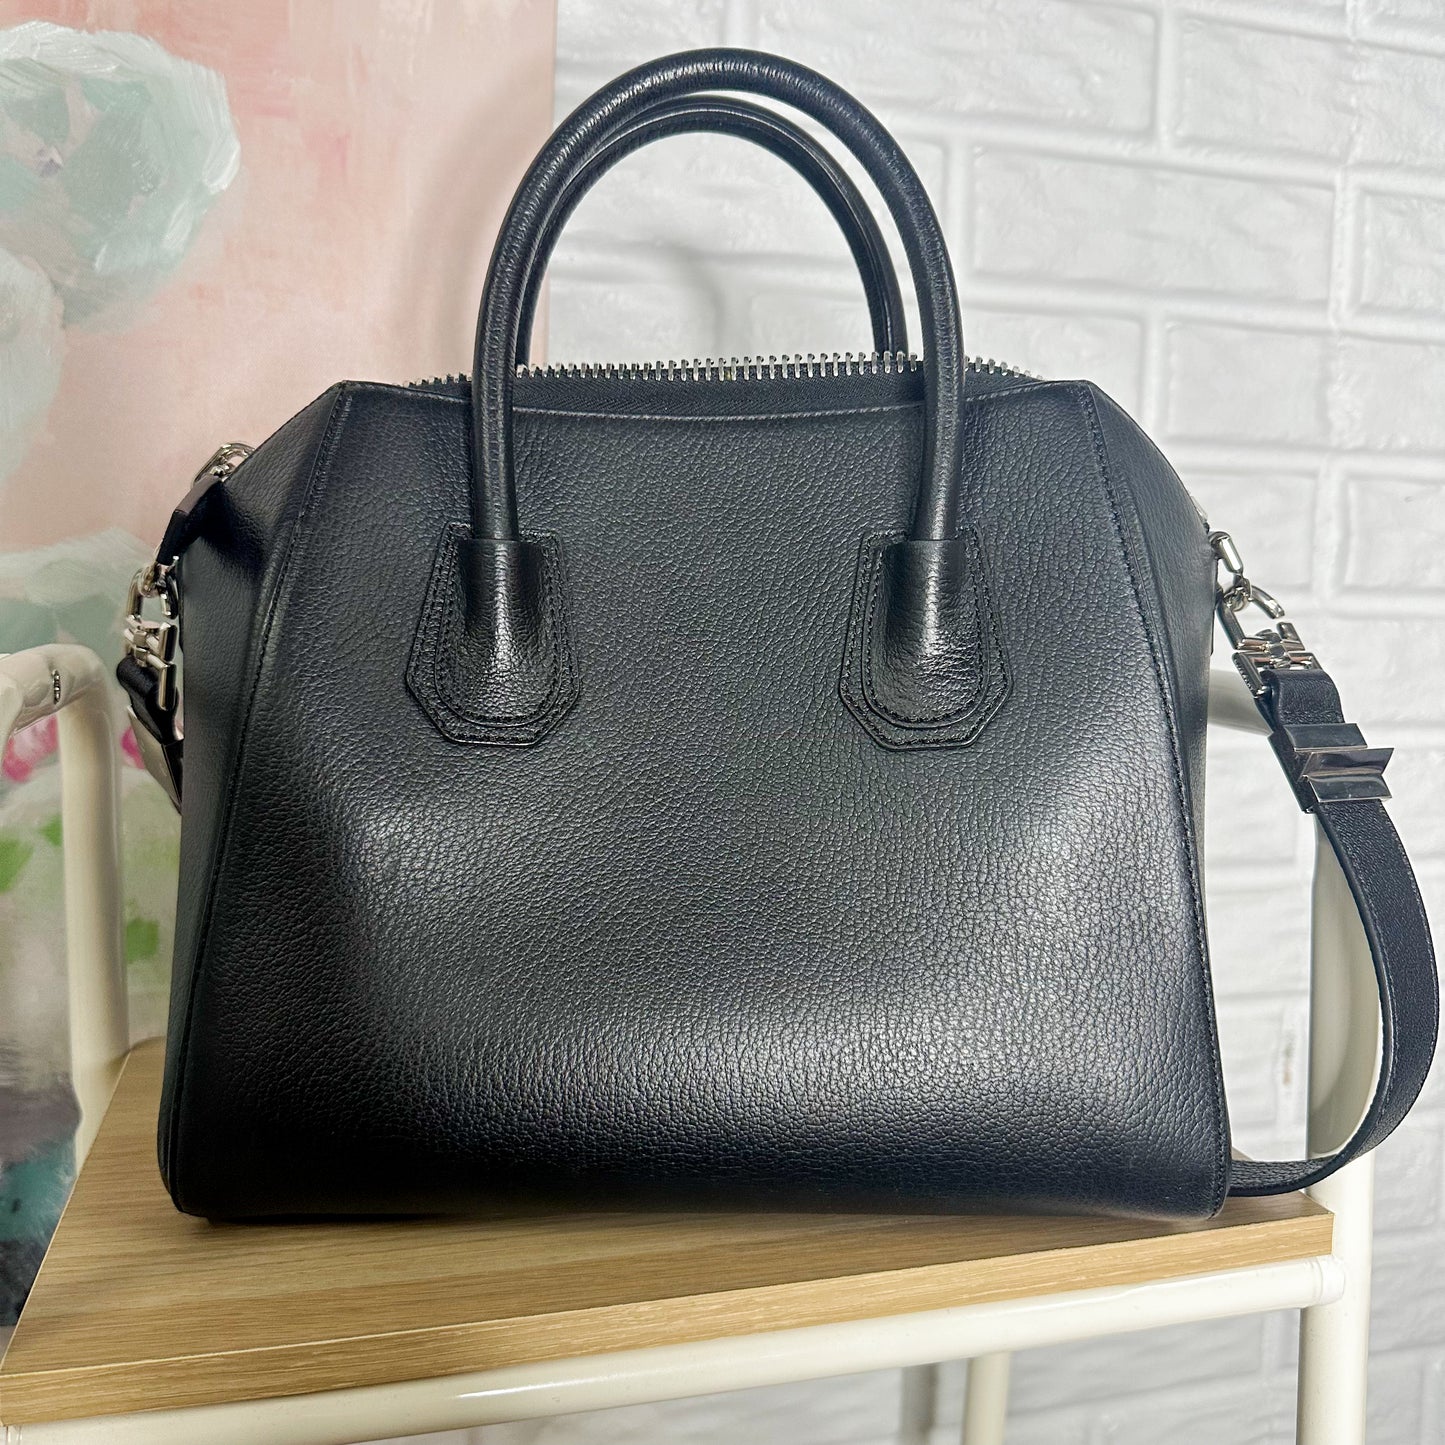 Givenchy Black Small Antigona Leather Handbag